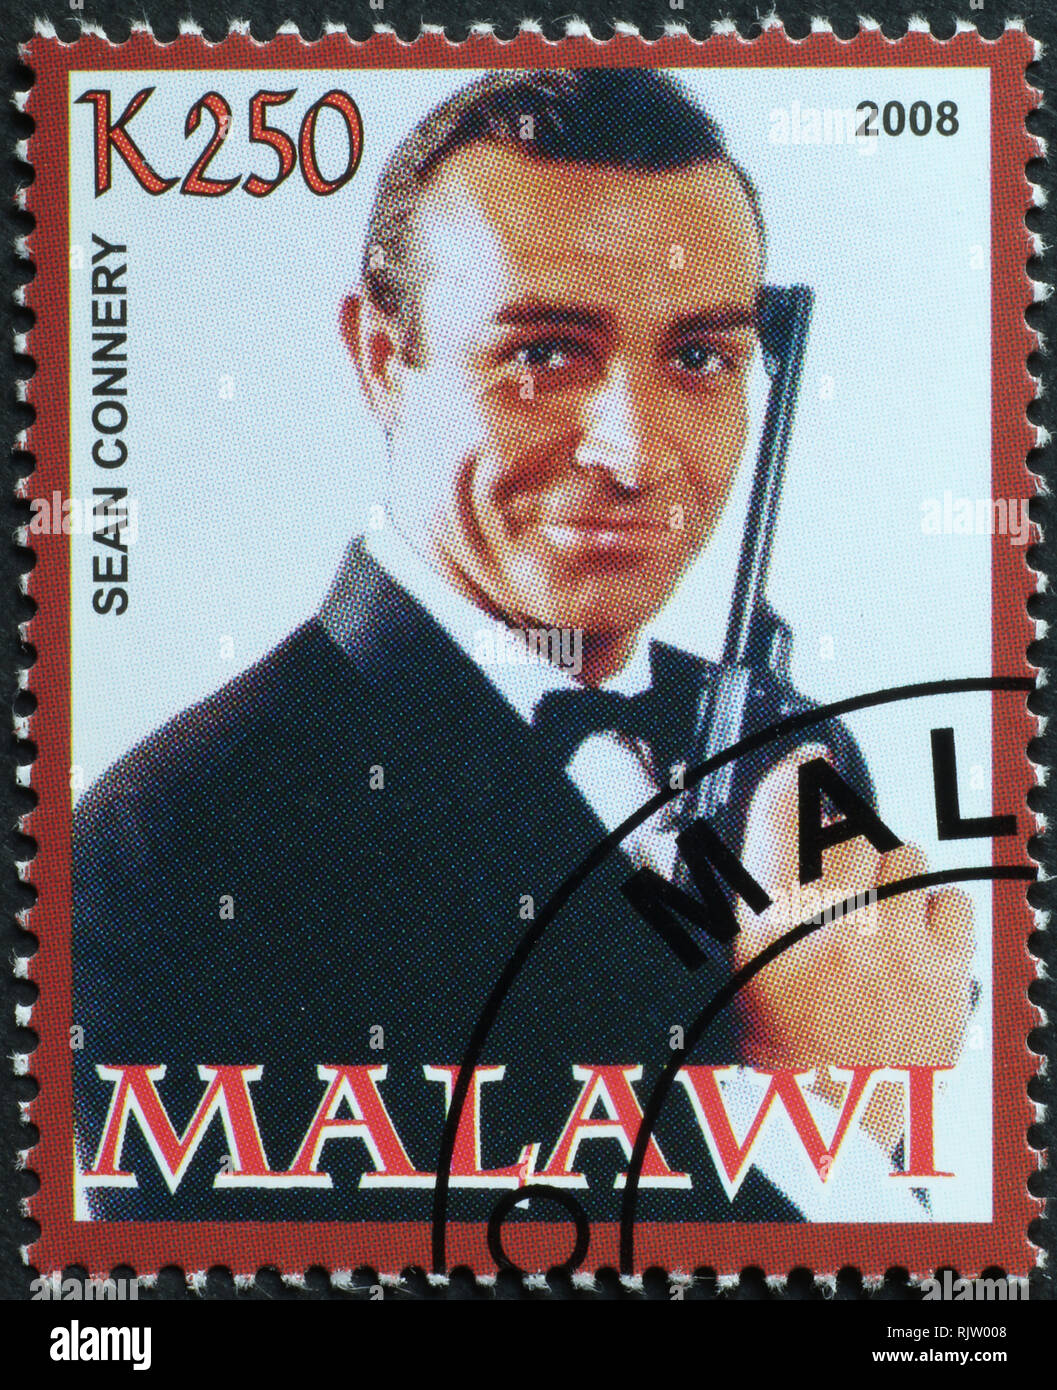 Sean Connery as James Bond on postage stamp Stock Photo